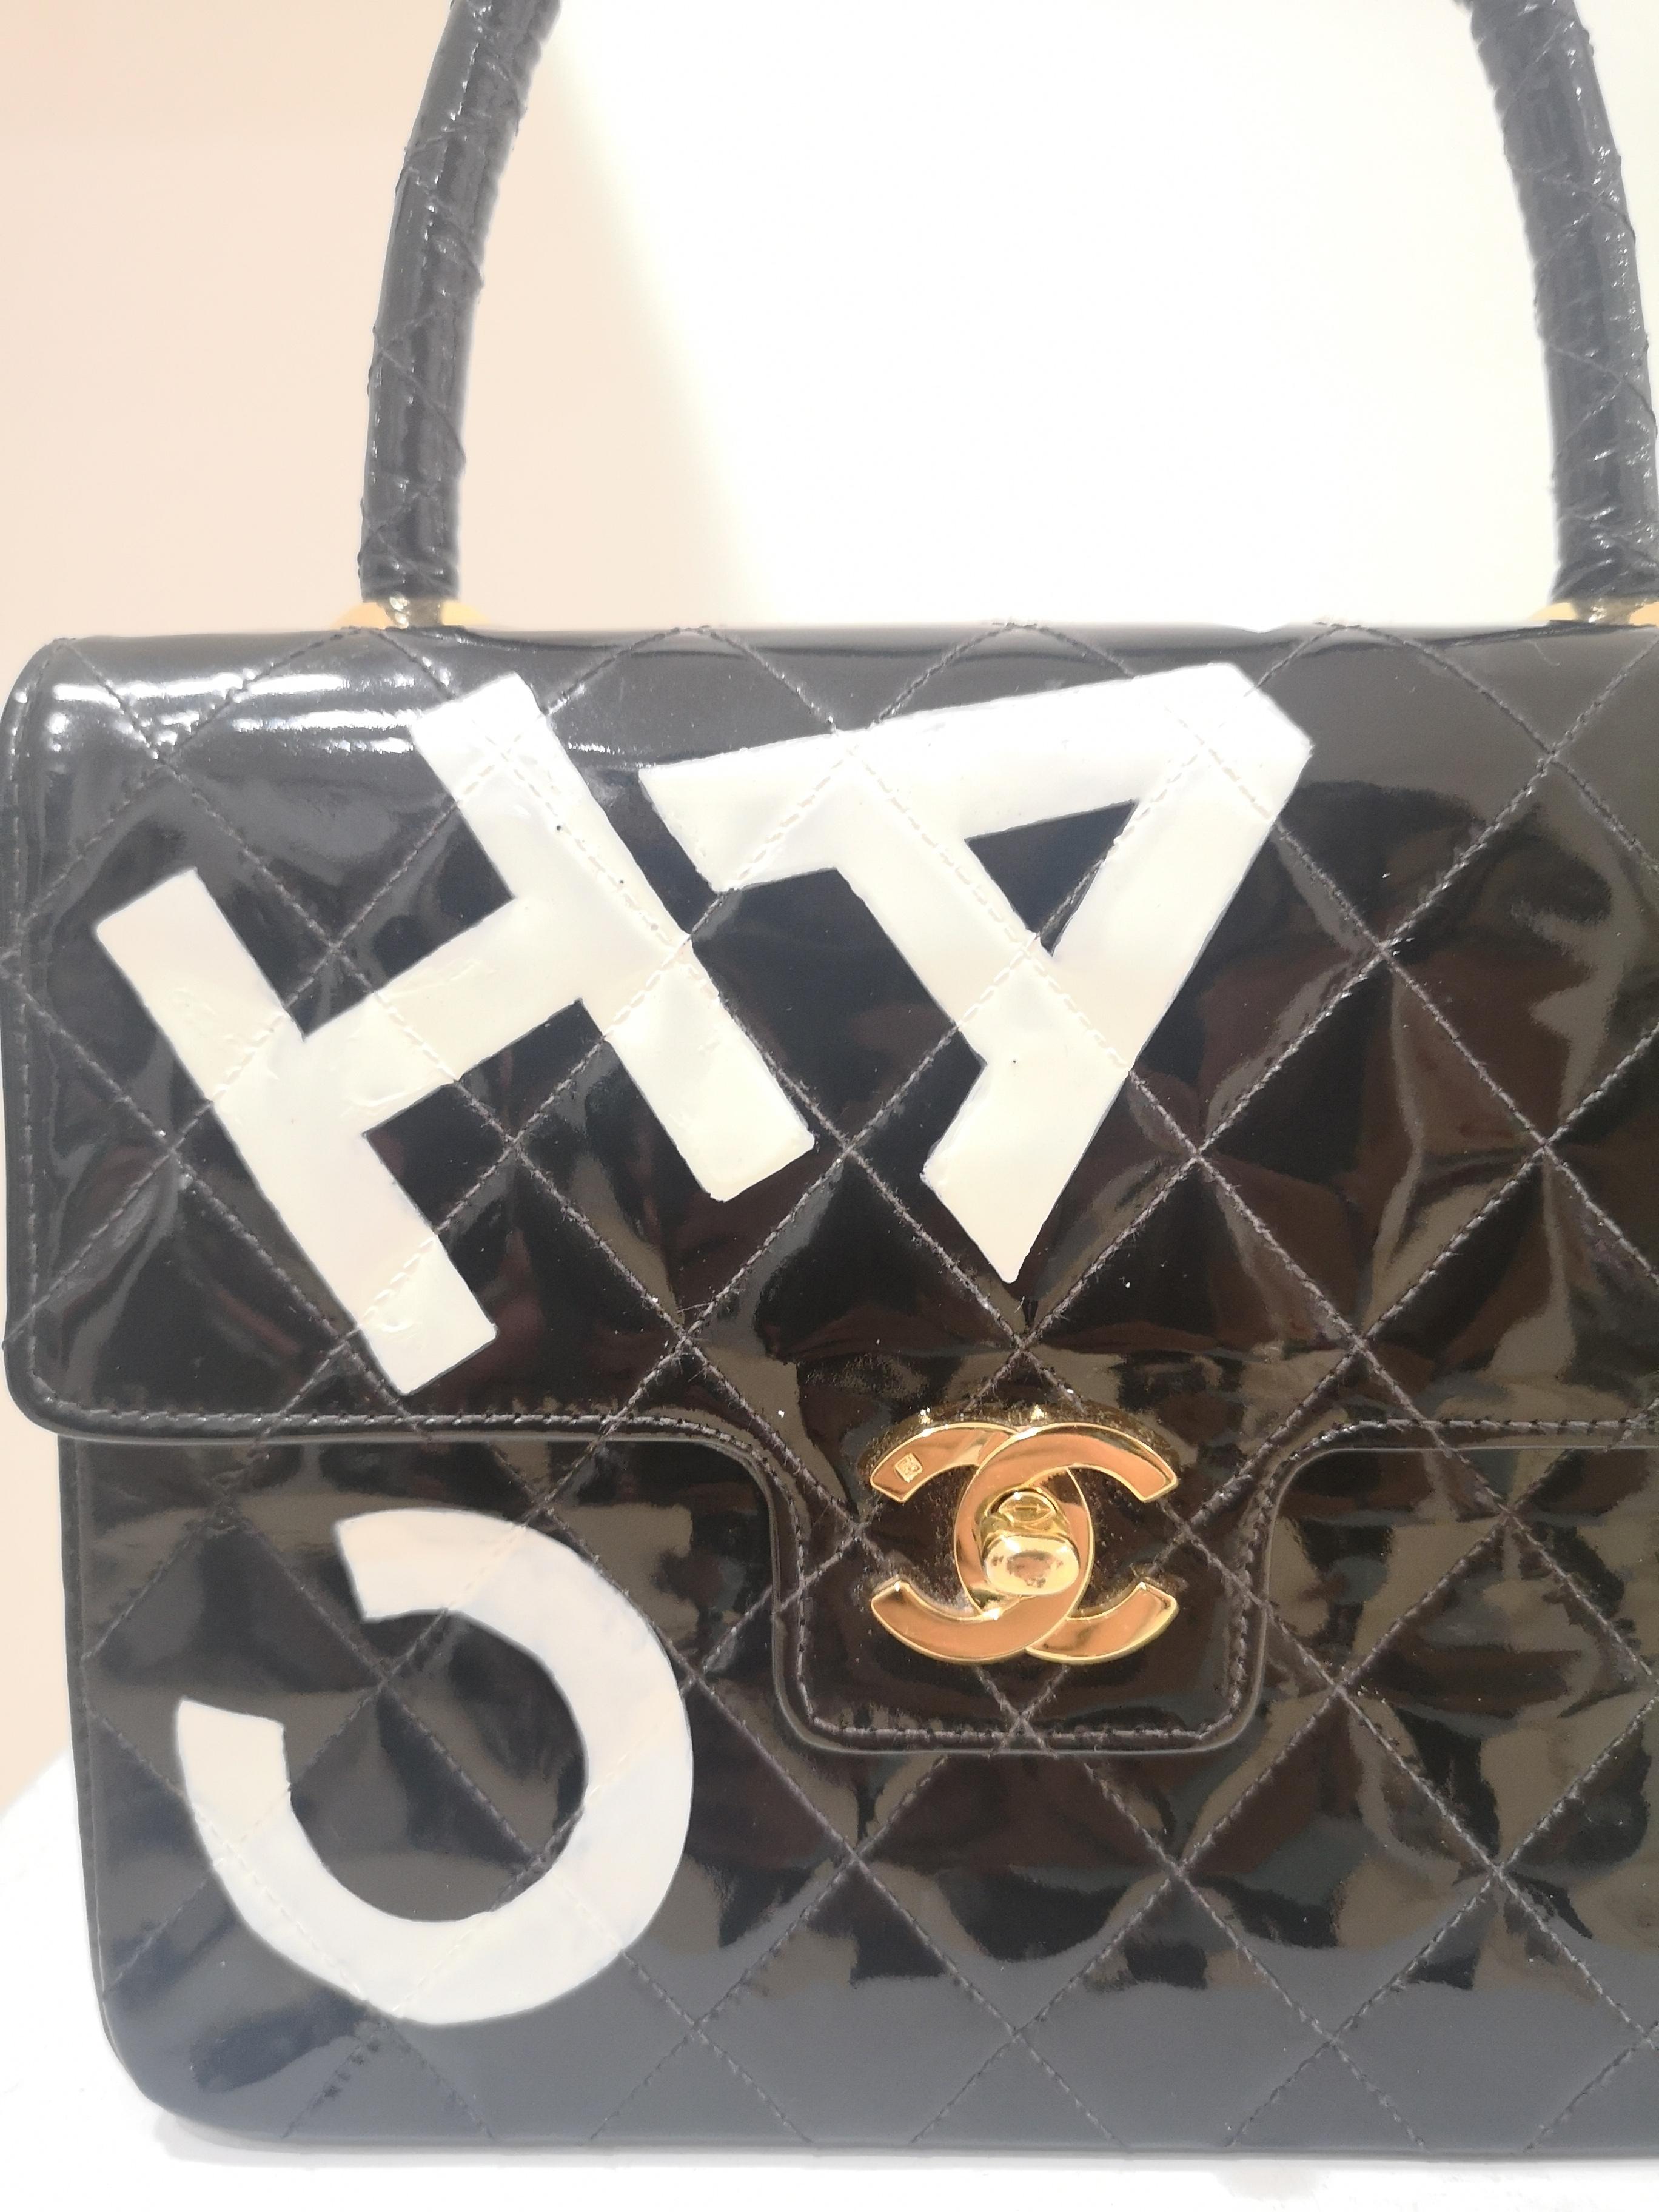 Chanel black patent leather handbag 
Width: 20 cm
Height: 15 cm